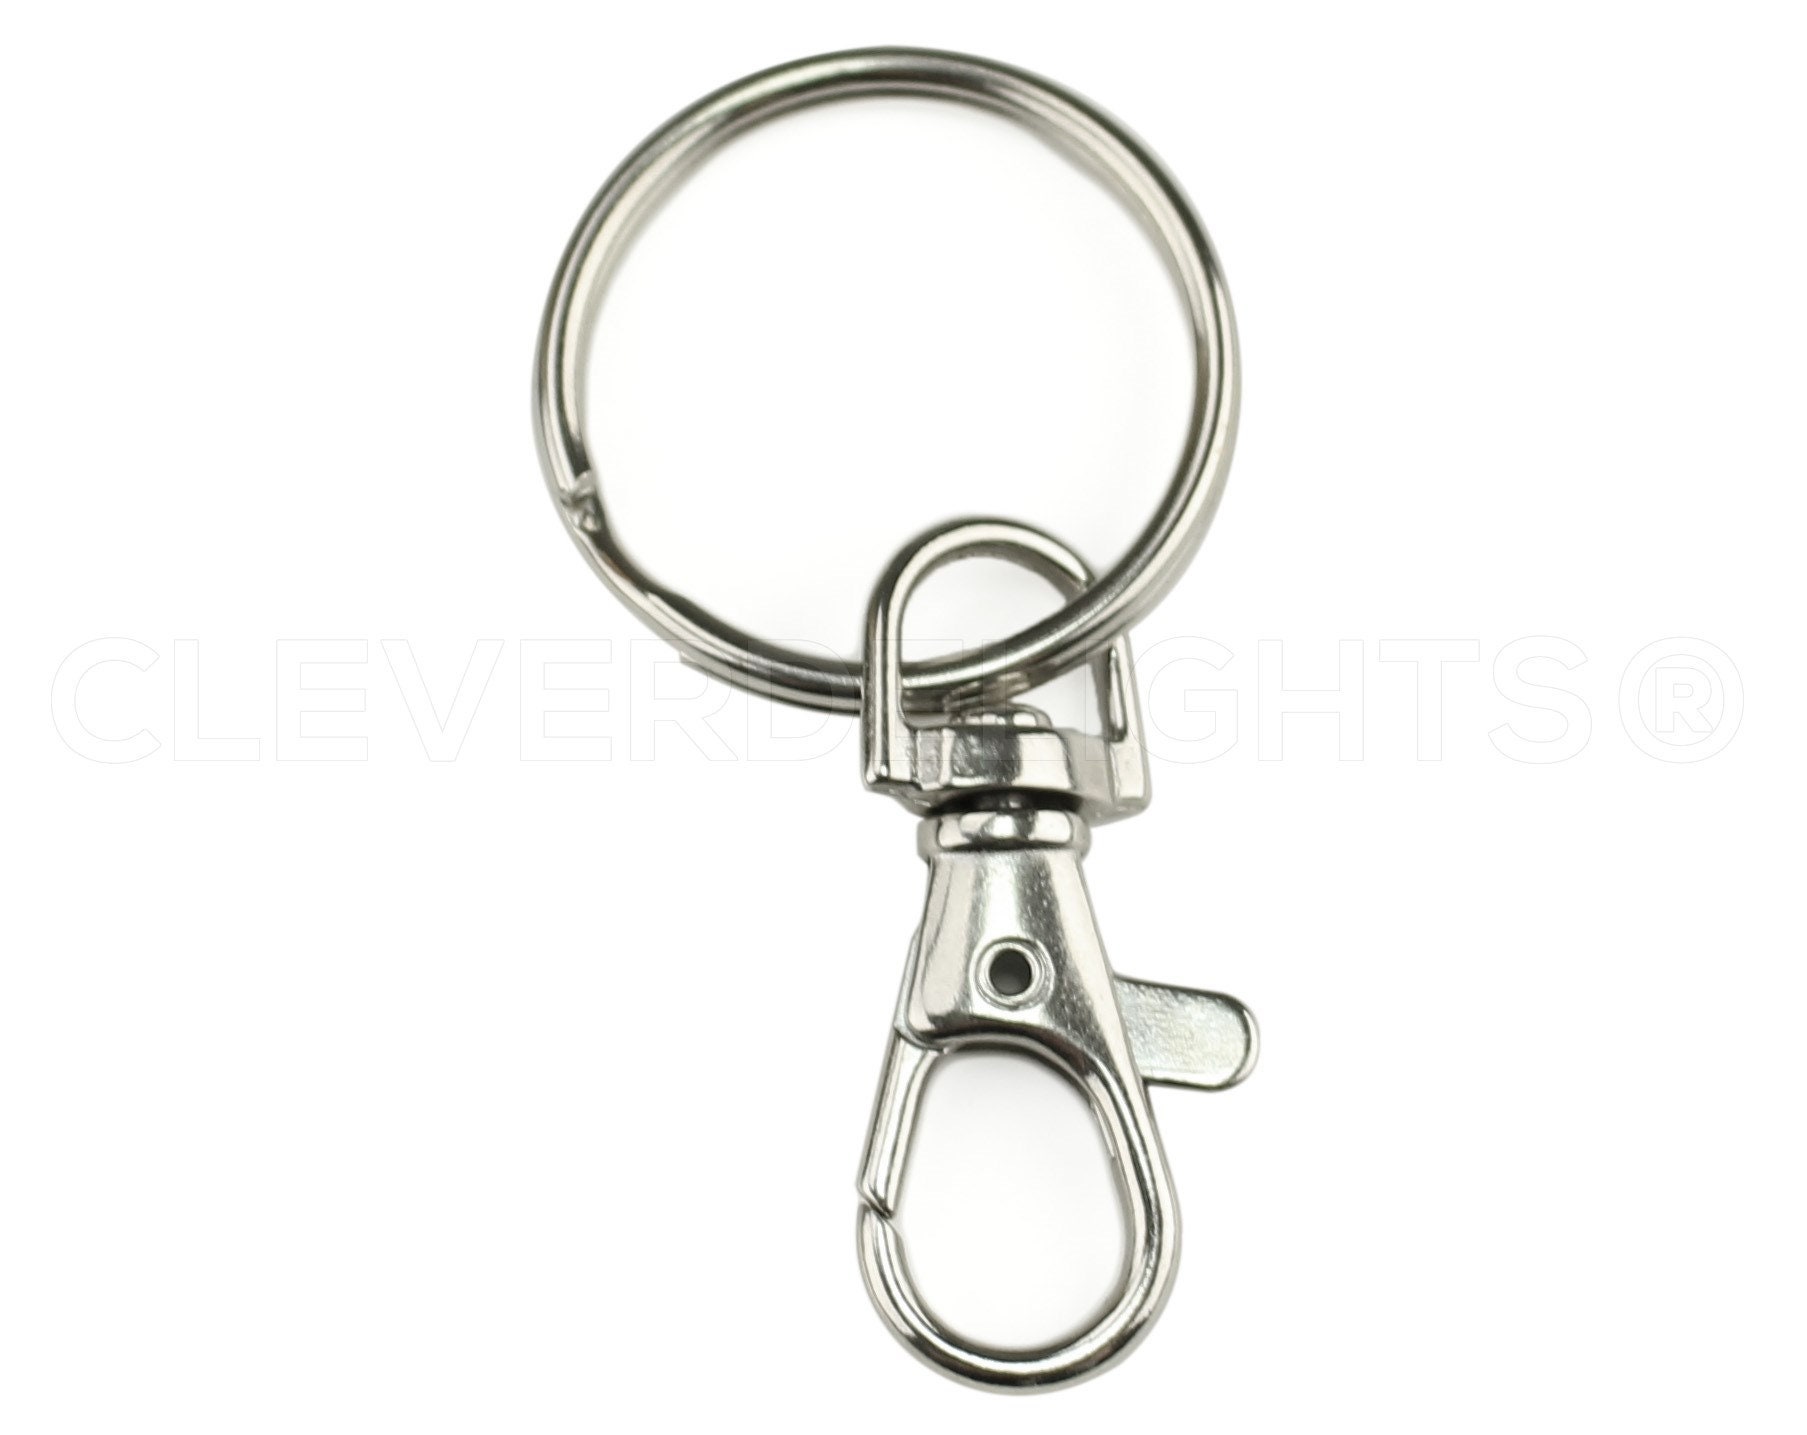 Buy 25 Sets 1.5 Swivel Lanyard Snap Hooks 1 3/16 Key Rings for ID